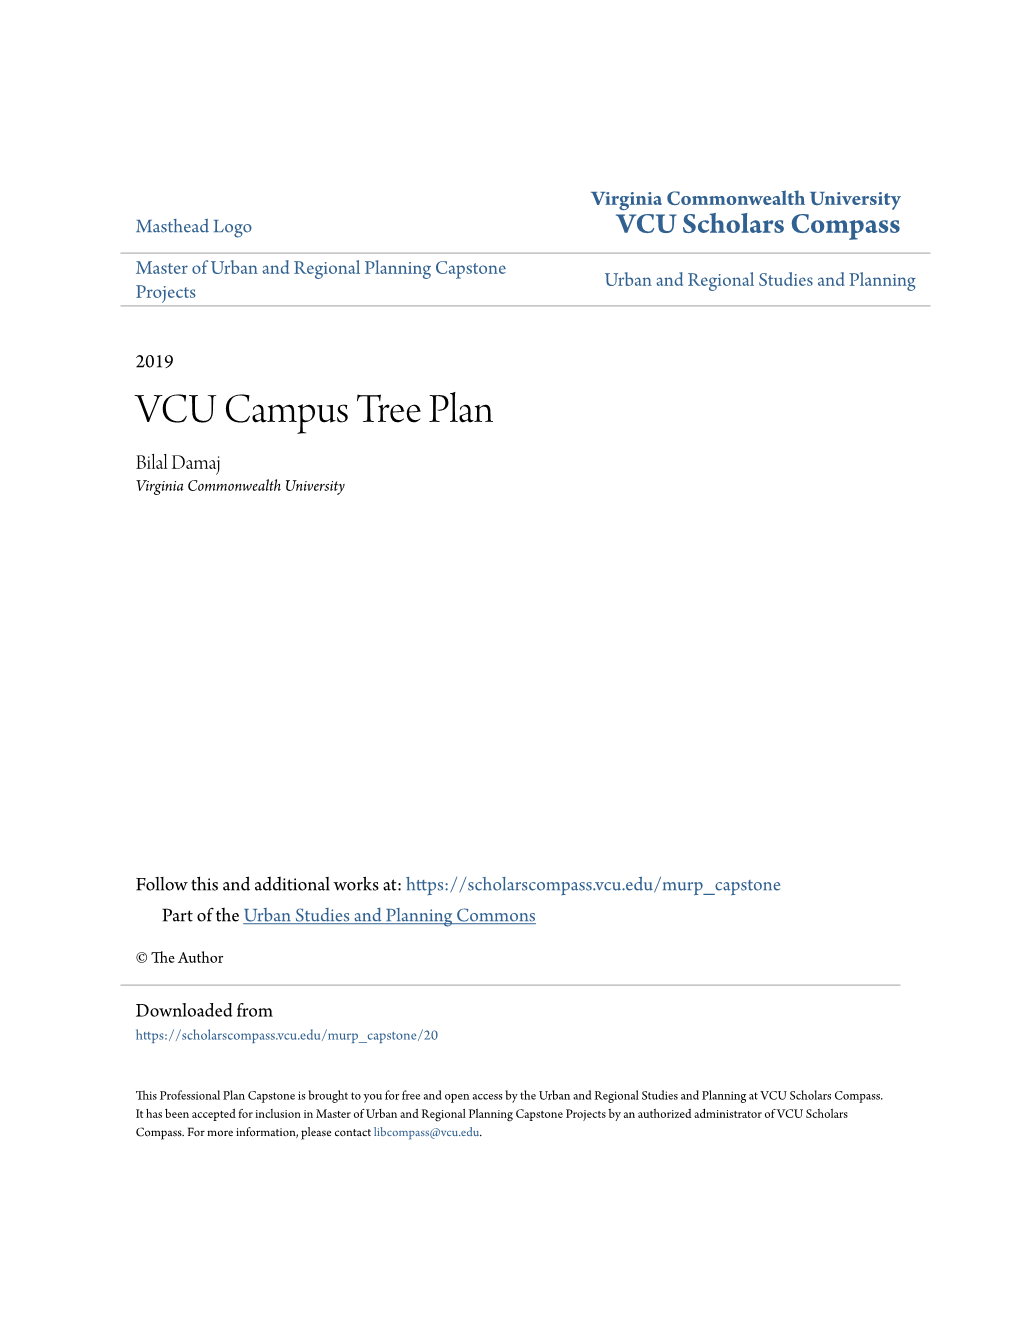 VCU Campus Tree Plan Bilal Damaj Virginia Commonwealth University